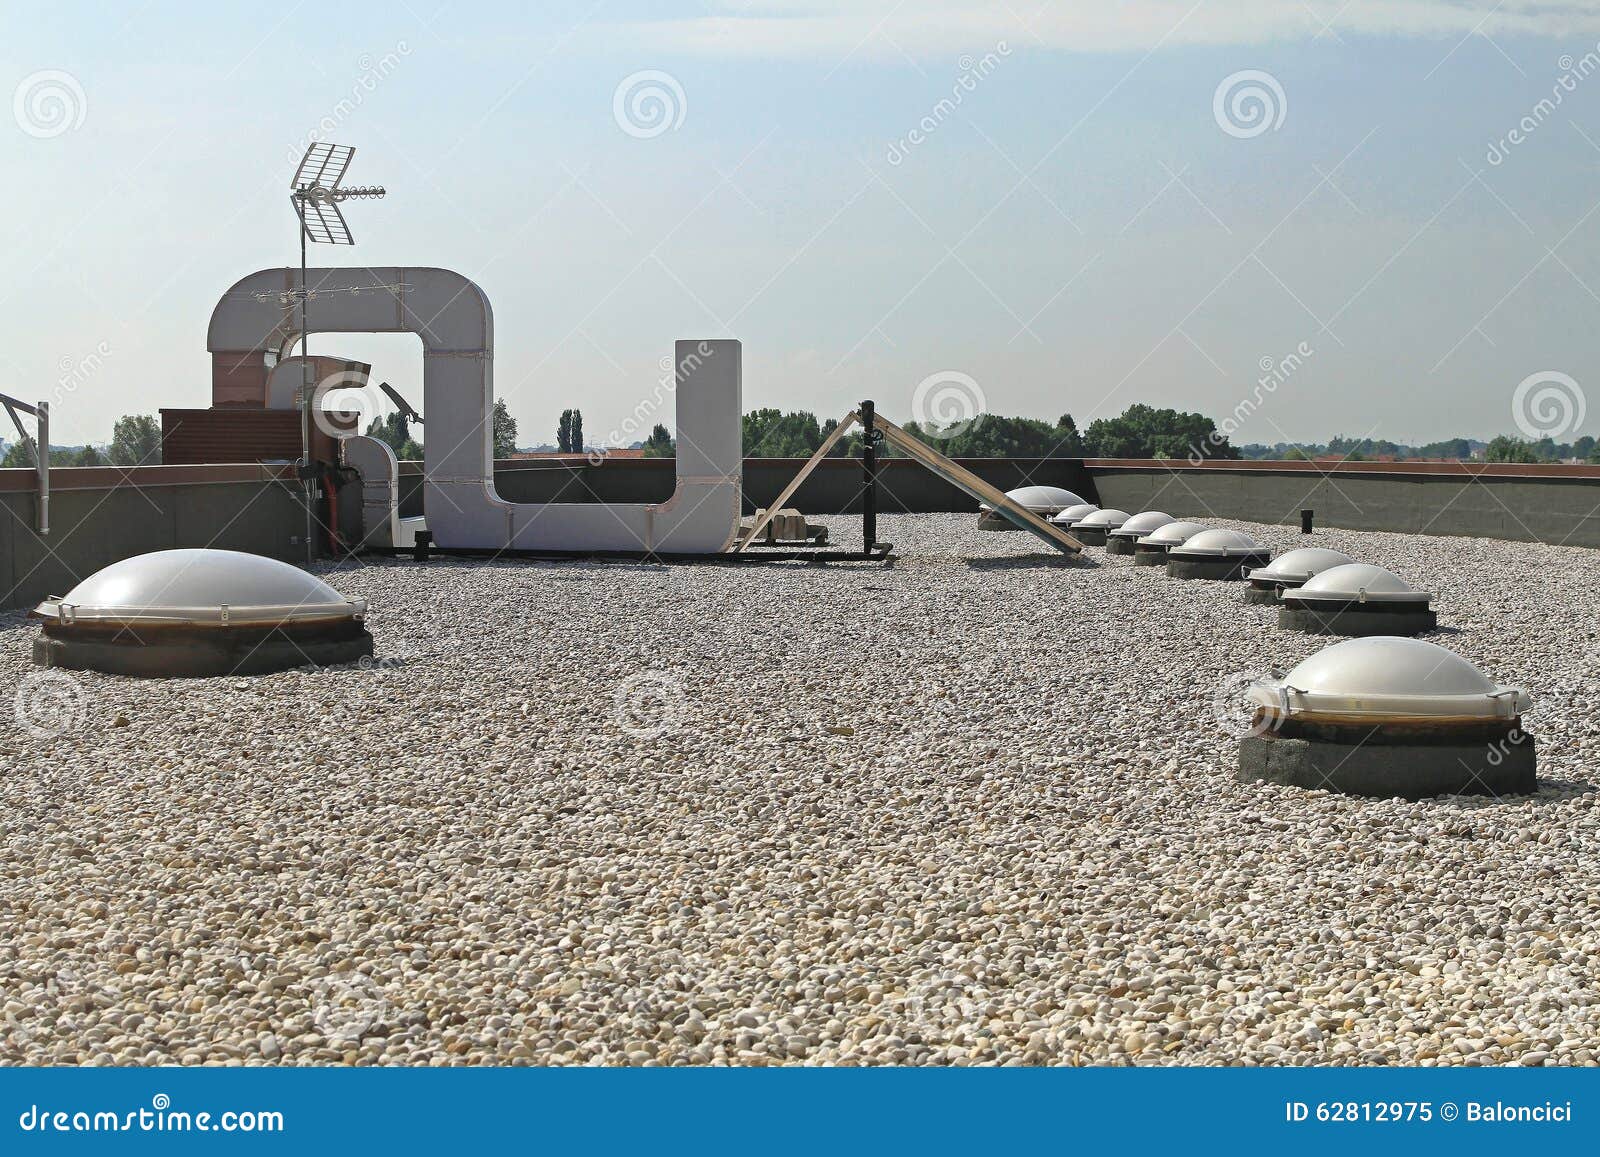 gravel flat roof